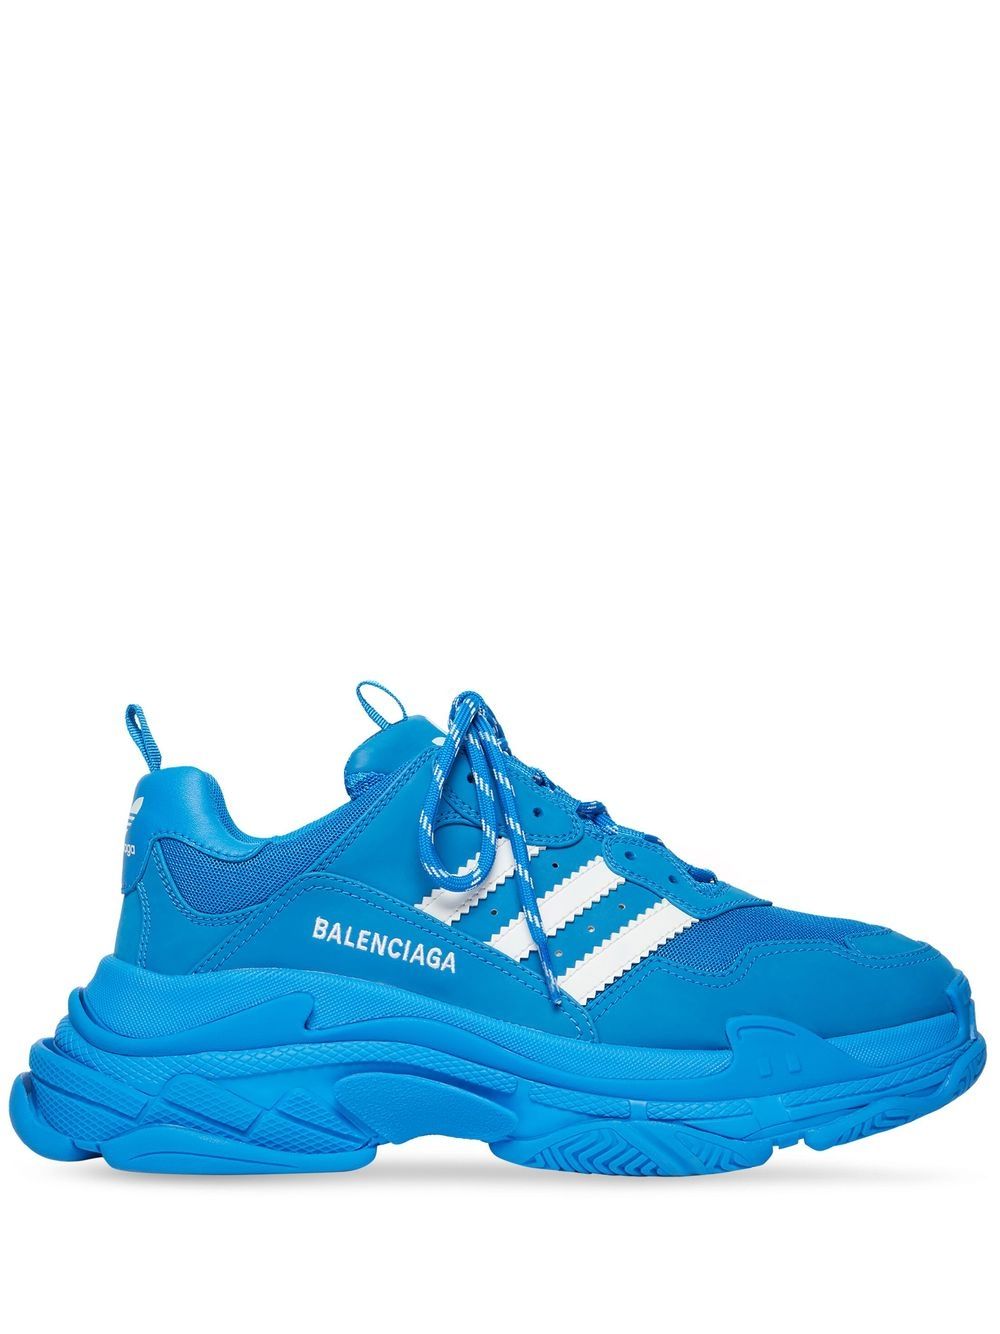 Balenciaga x adidas Triple S sneakers - Blue